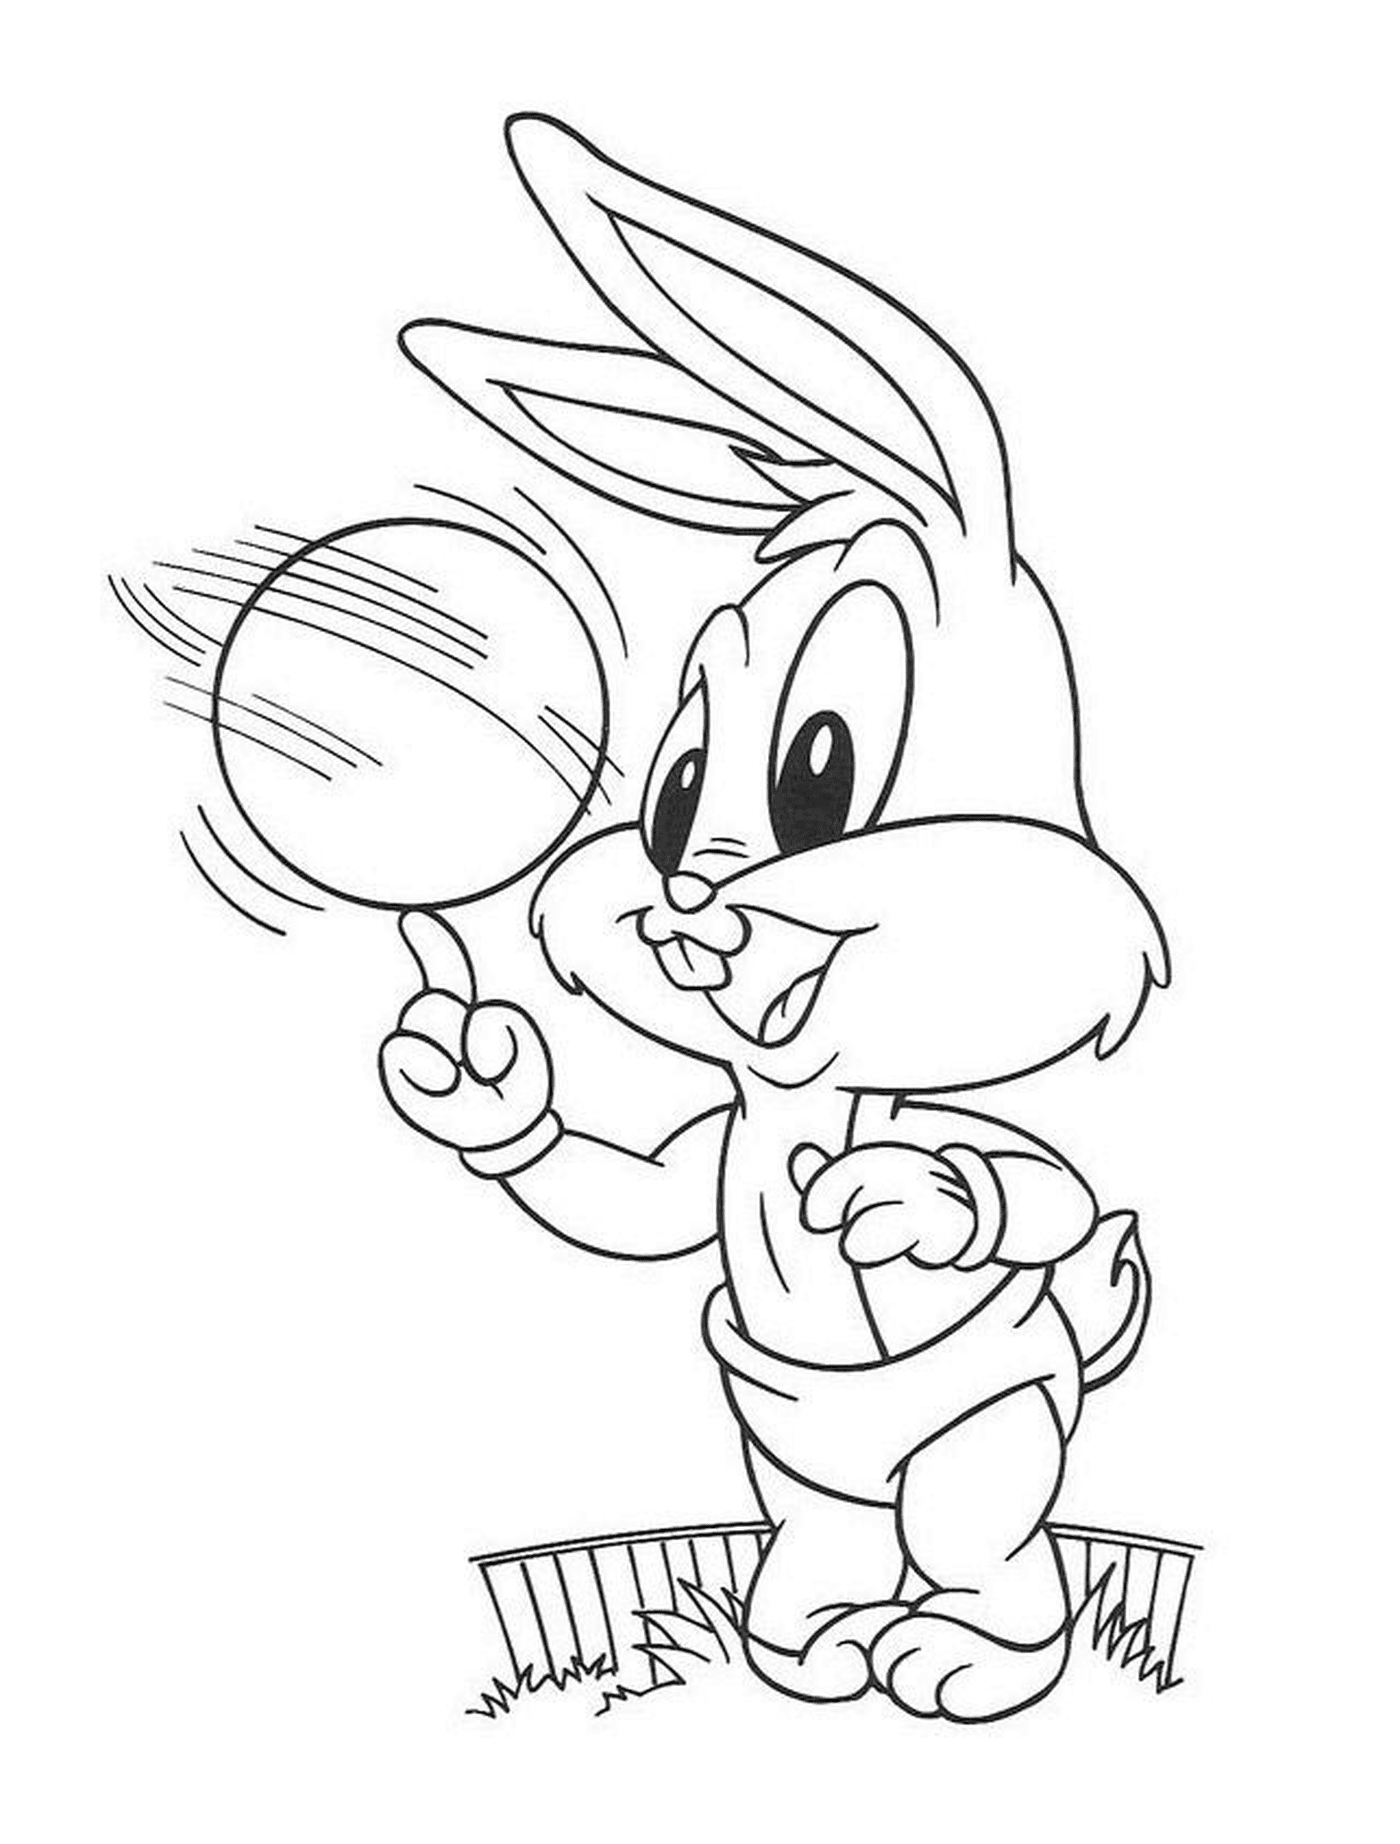  Rabbit holding tennis ball 